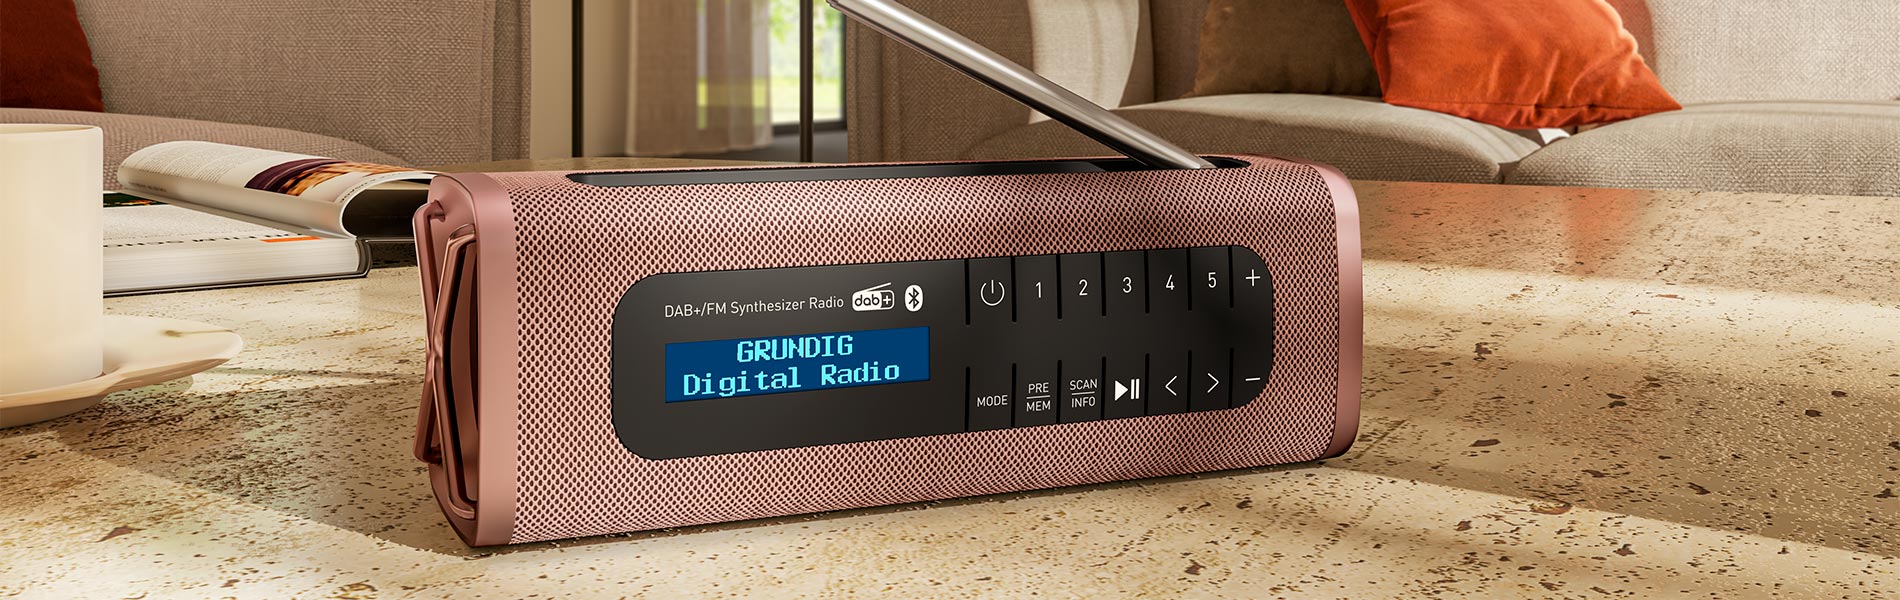 Diferencias entre radio FM y radio digital DAB